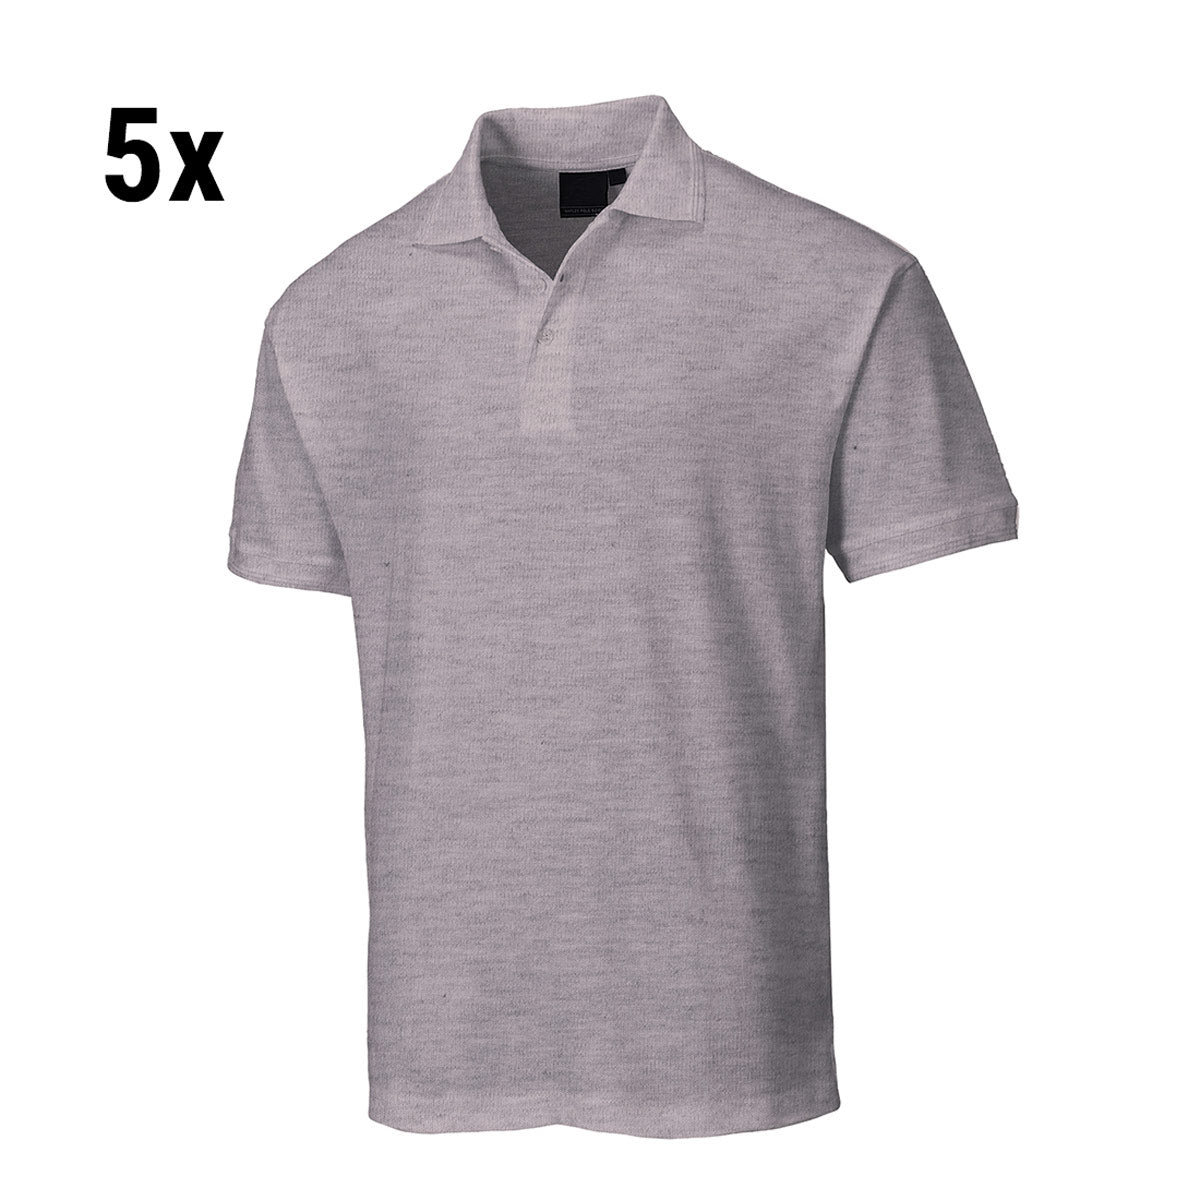 (5 stk.) Polo shirt til mænd - Grå - Størrelse: 3XL